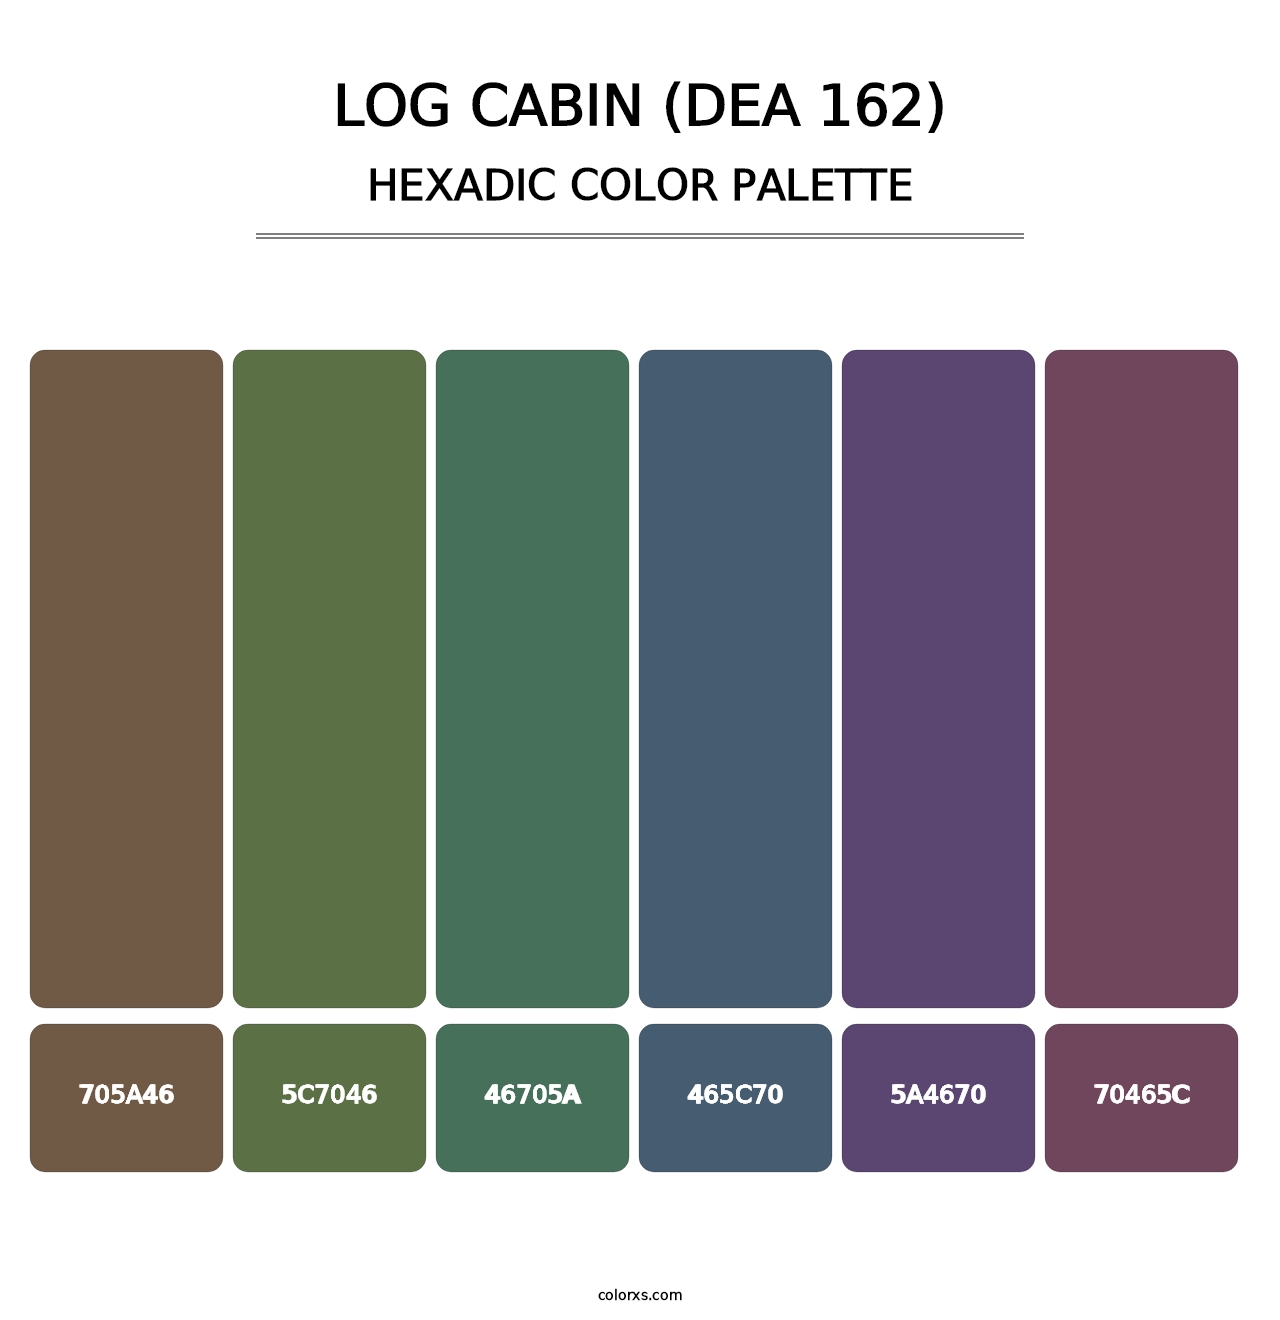 Log Cabin (DEA 162) - Hexadic Color Palette